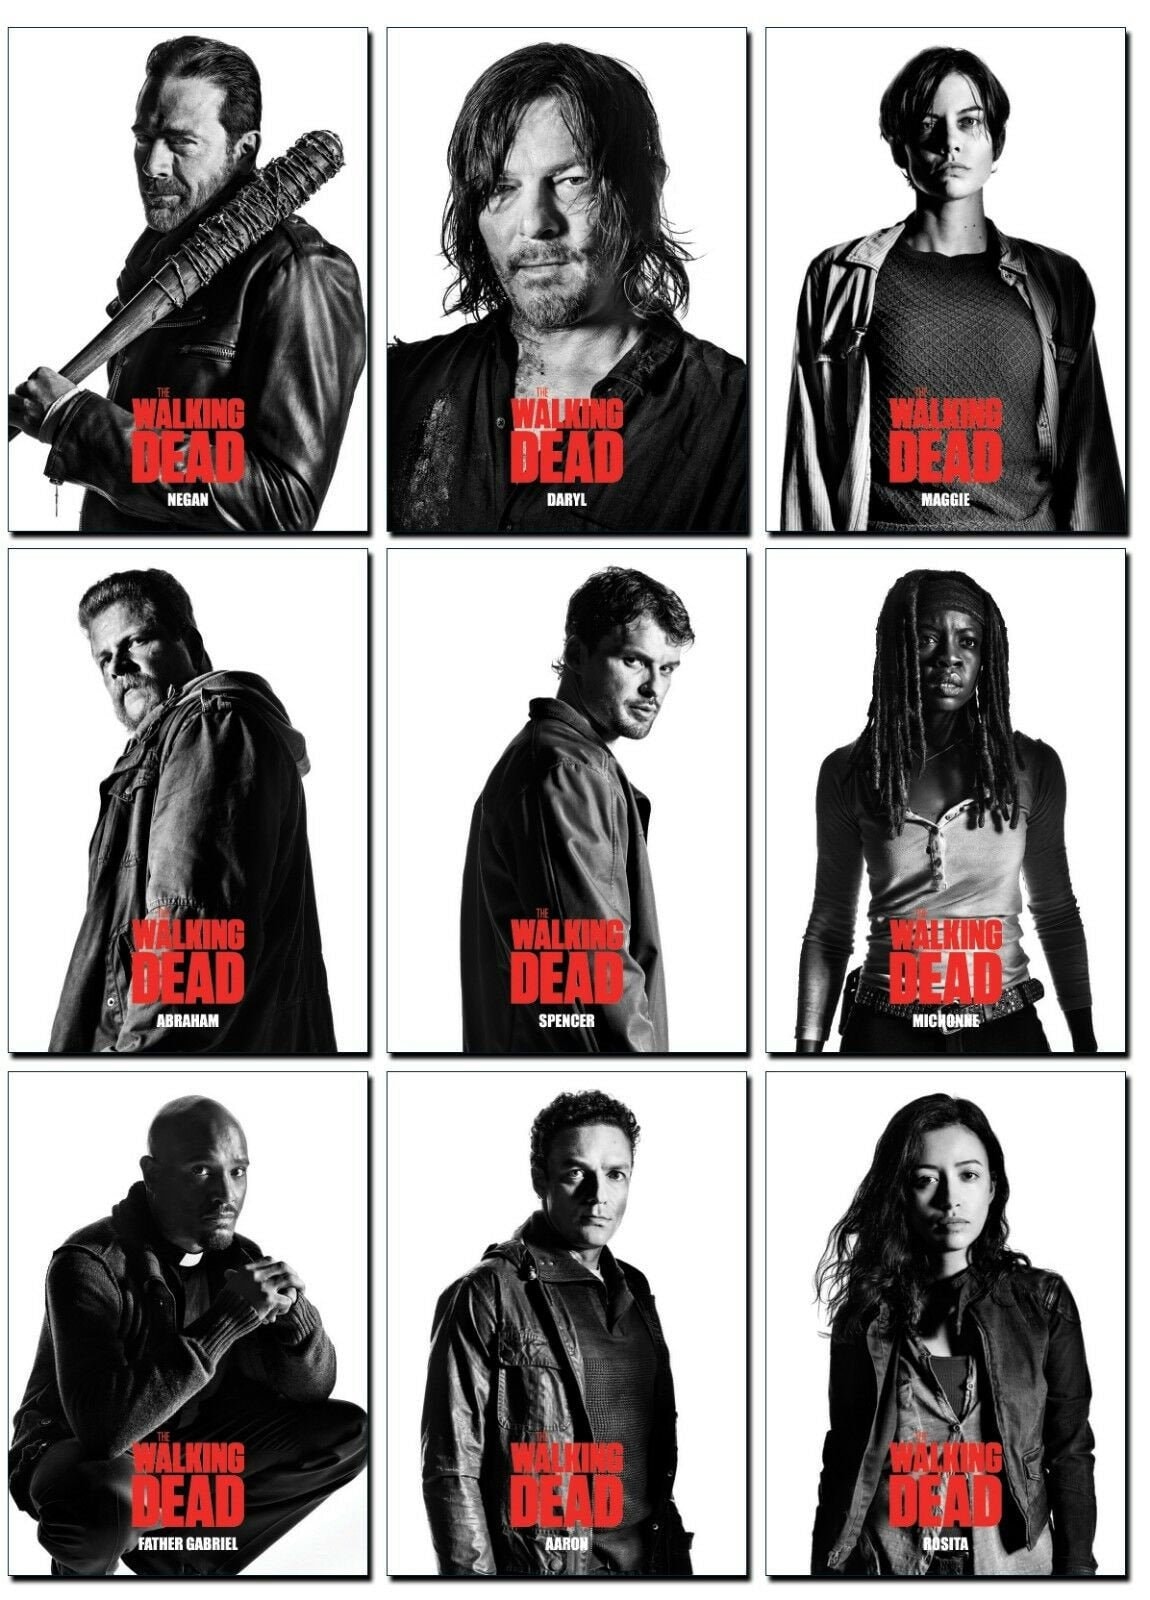 The Walking Dead Poster Season 7 (Exclusive Art) Negan Glenn Abraham - NEW